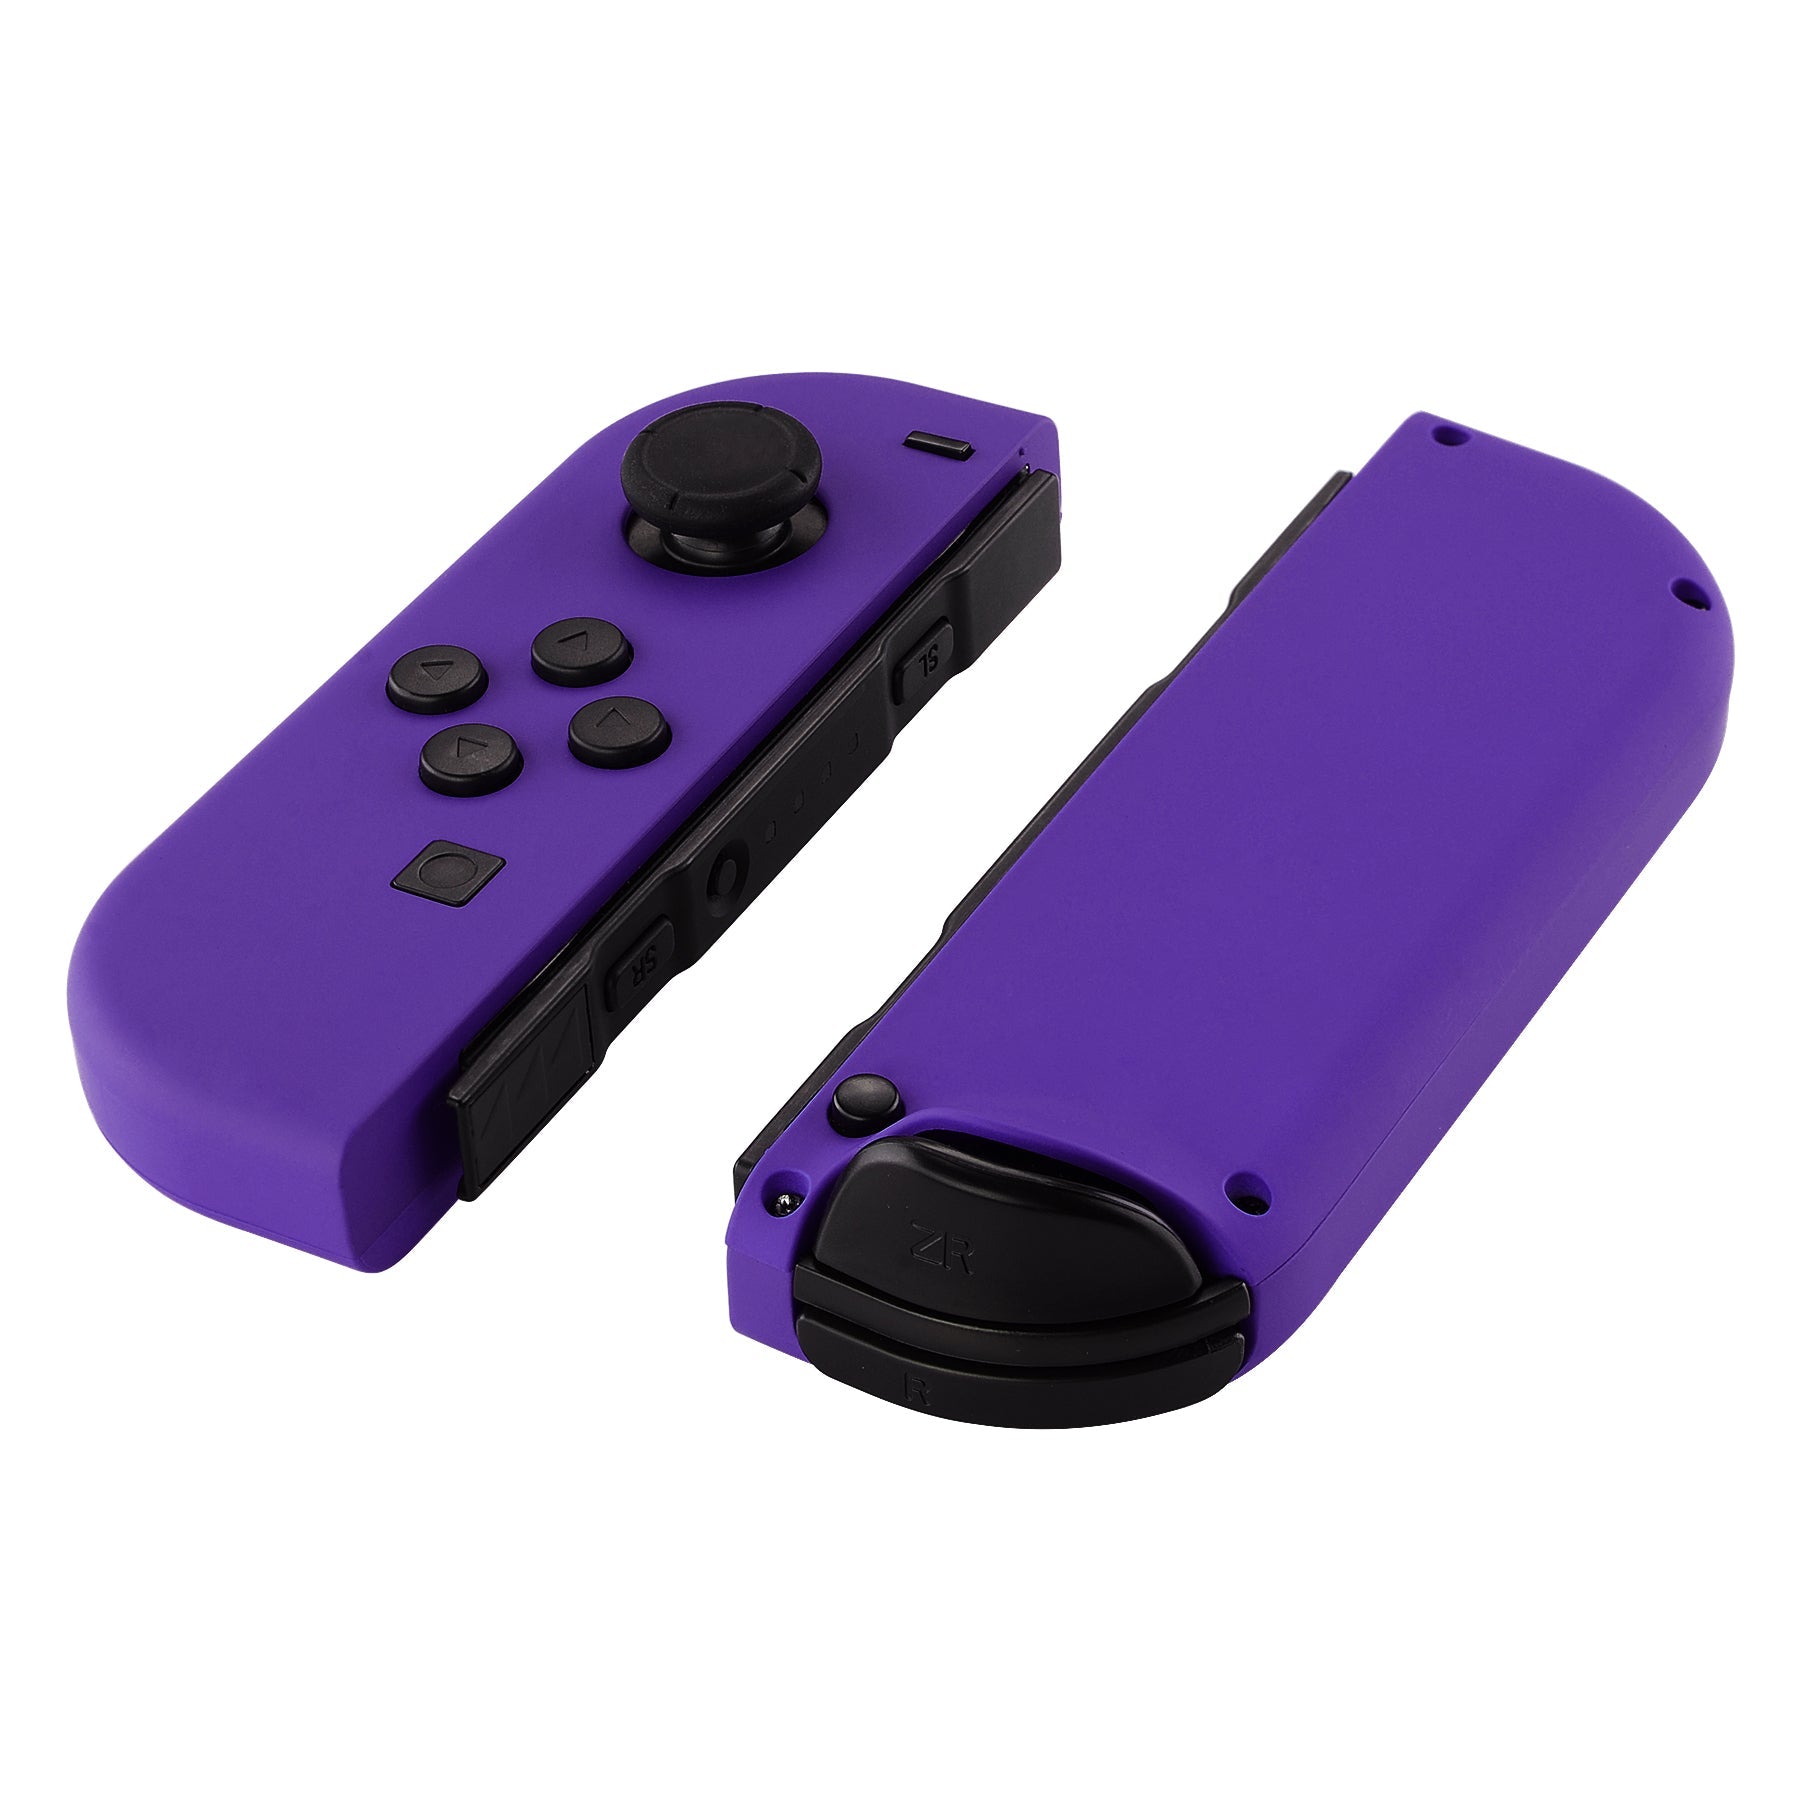 Nintendo Switch Joy-Con Controller Shells - Soft Touch